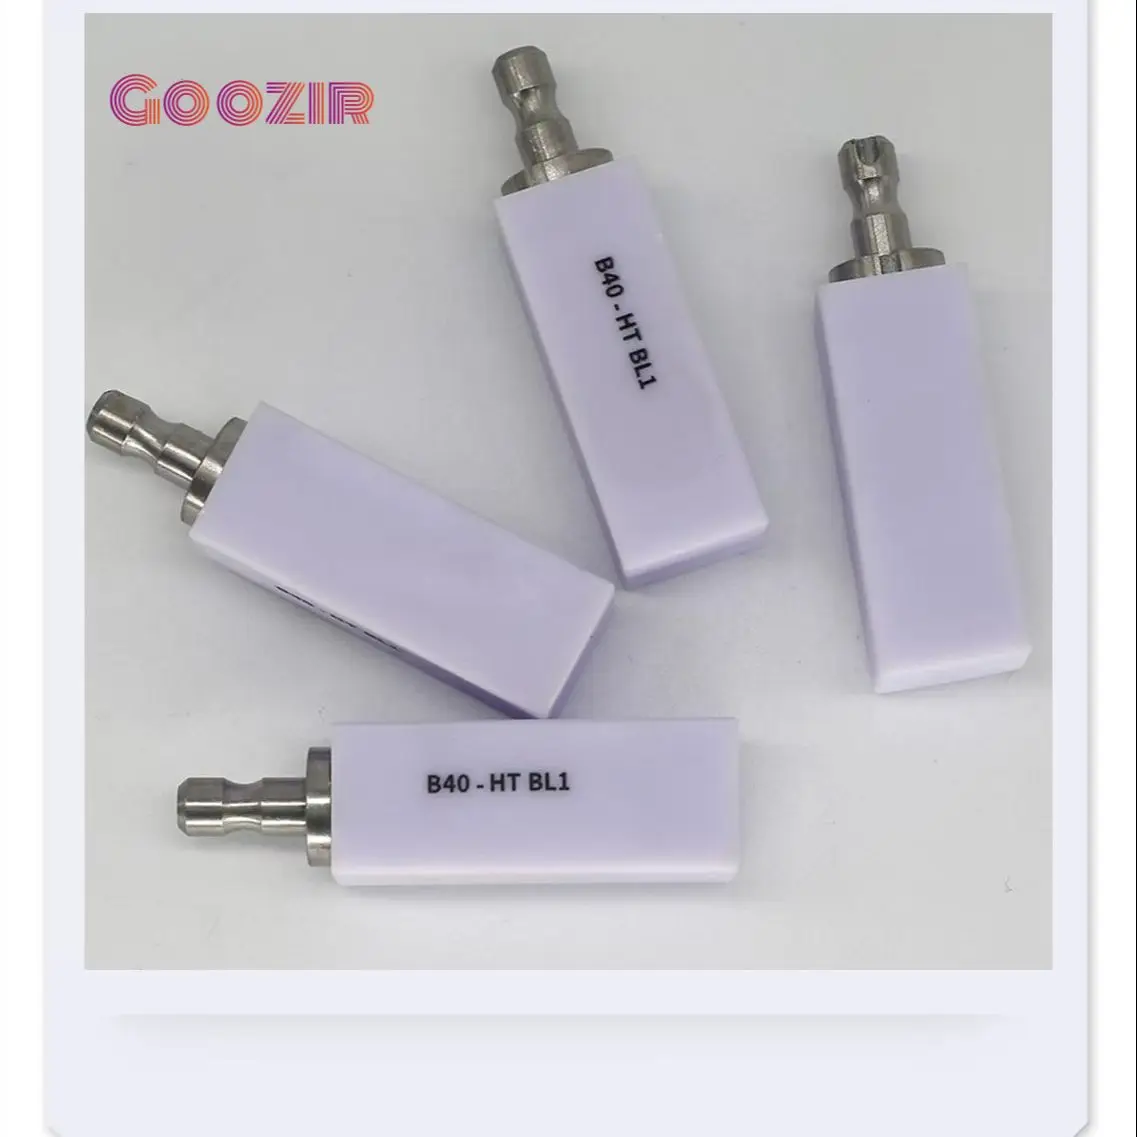 

Goozir emax lithium disilicate CADCAM machine material high translucency dental restorative materials Veneer Inlay Onlay B40 LT